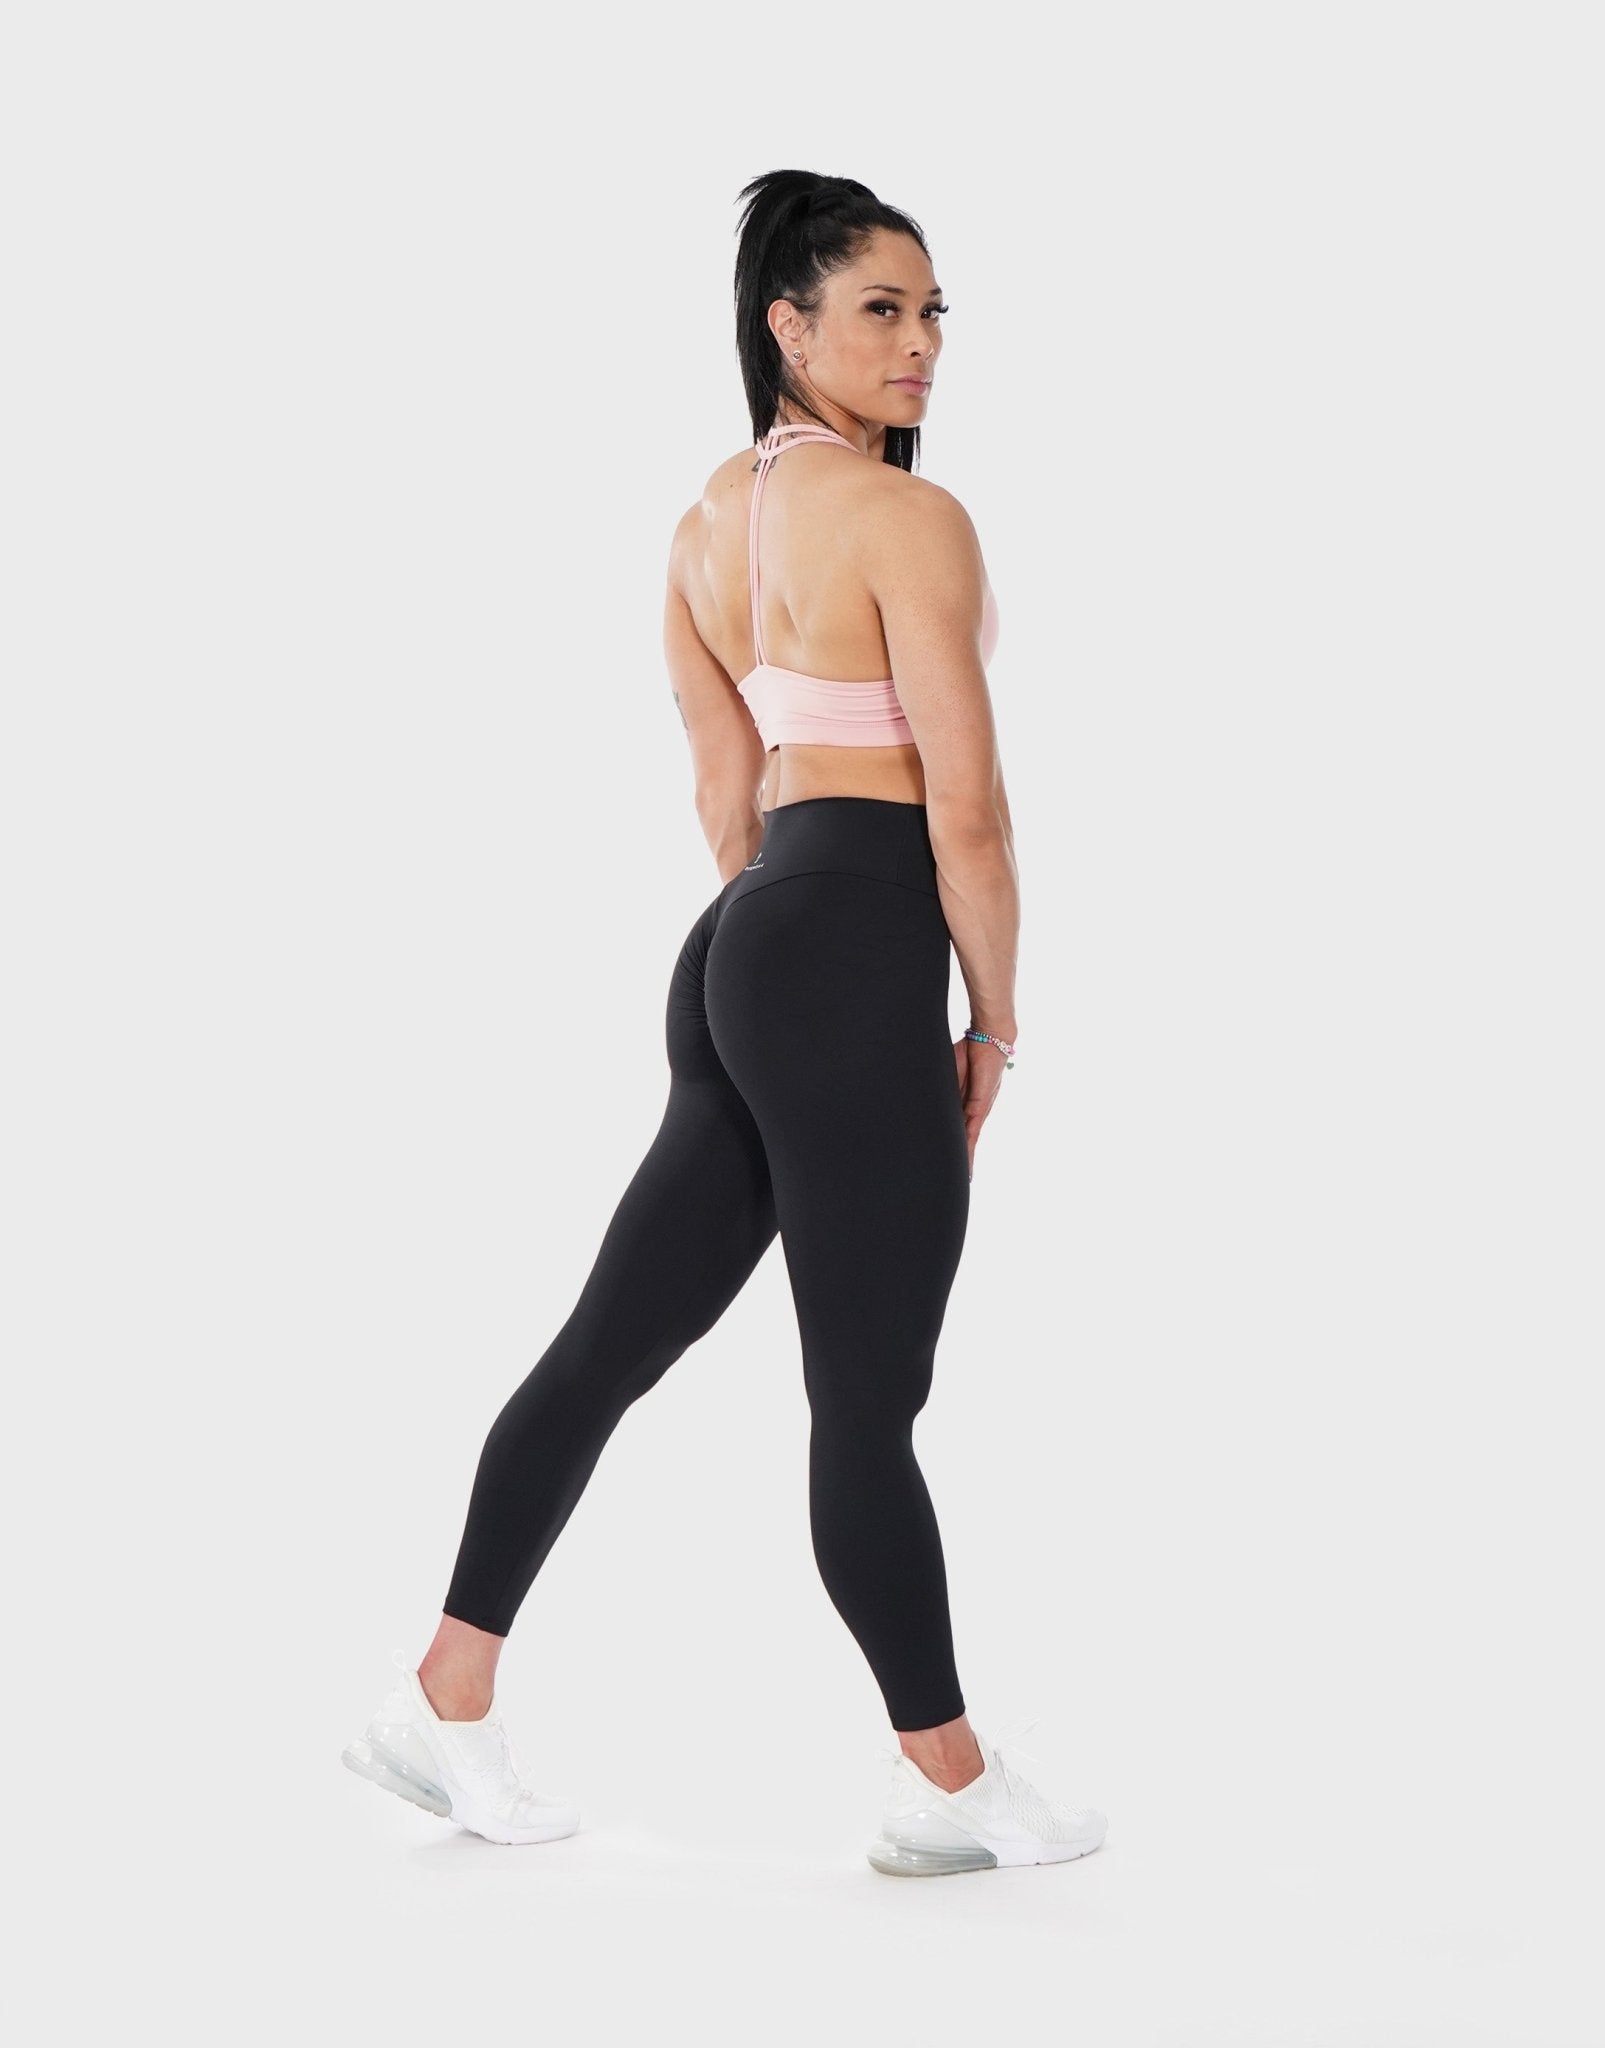 Buttock Push Up Leggings Women Sports Fitness Short Pants Black